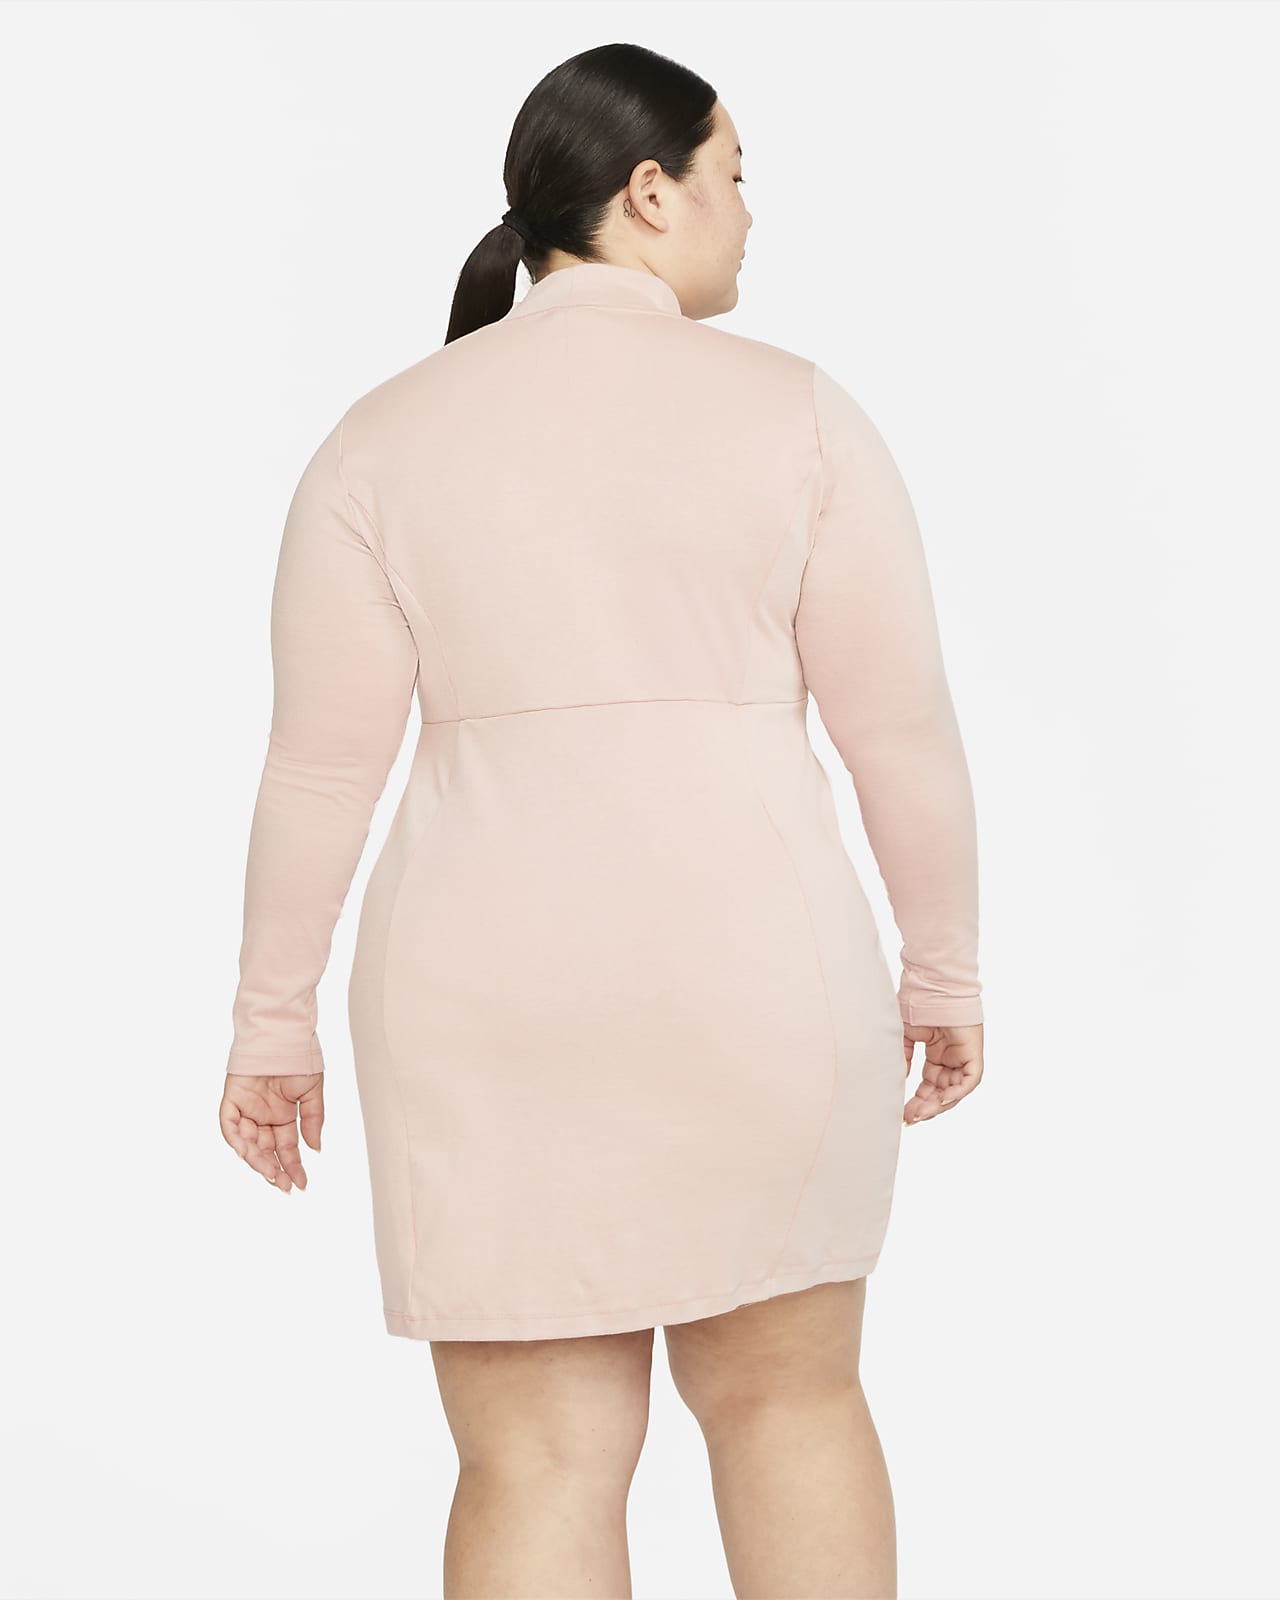 Nike Air Women's Dress (Plus Size). Nike.com